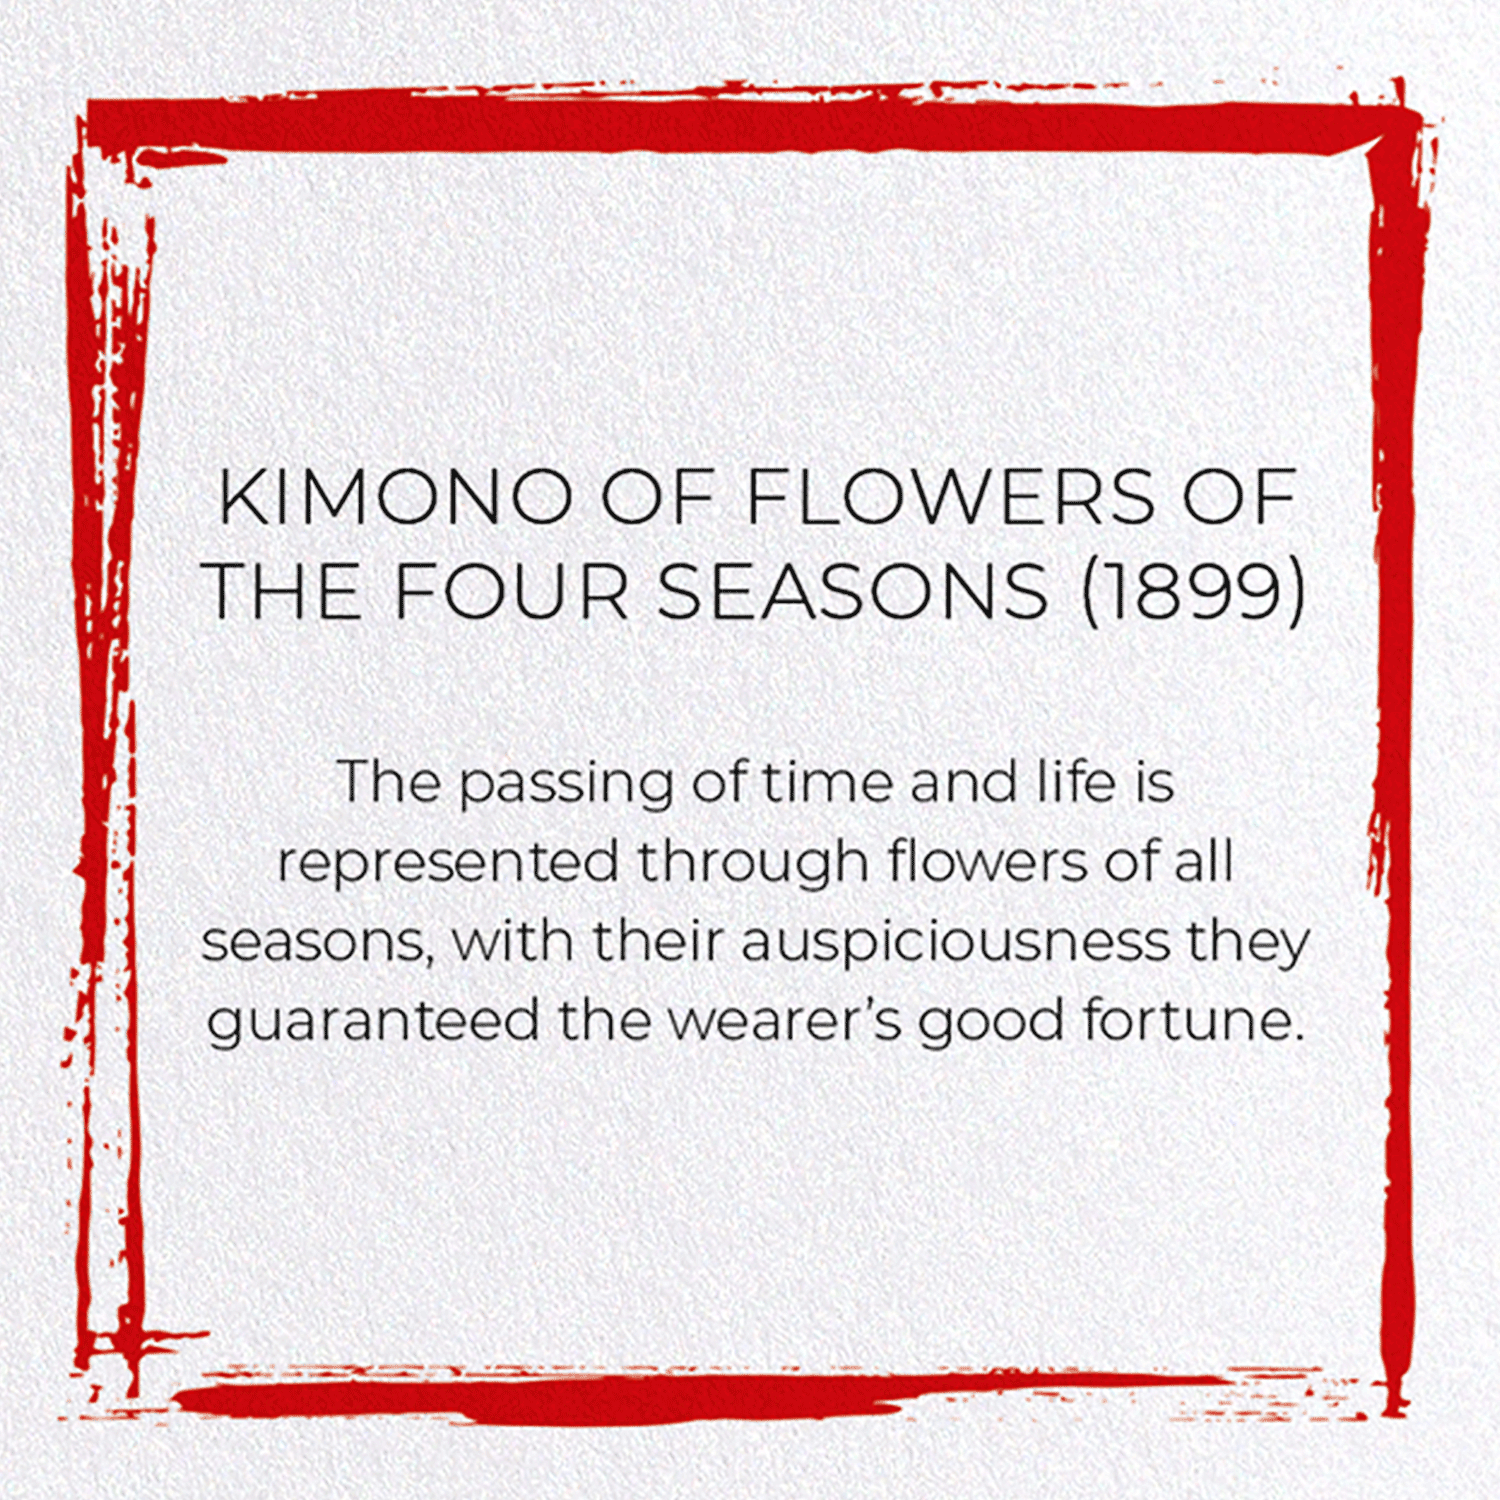 KIMONO OF FLOWERS OF THE FOUR SEASONS (1899): Japanese Greeting Card